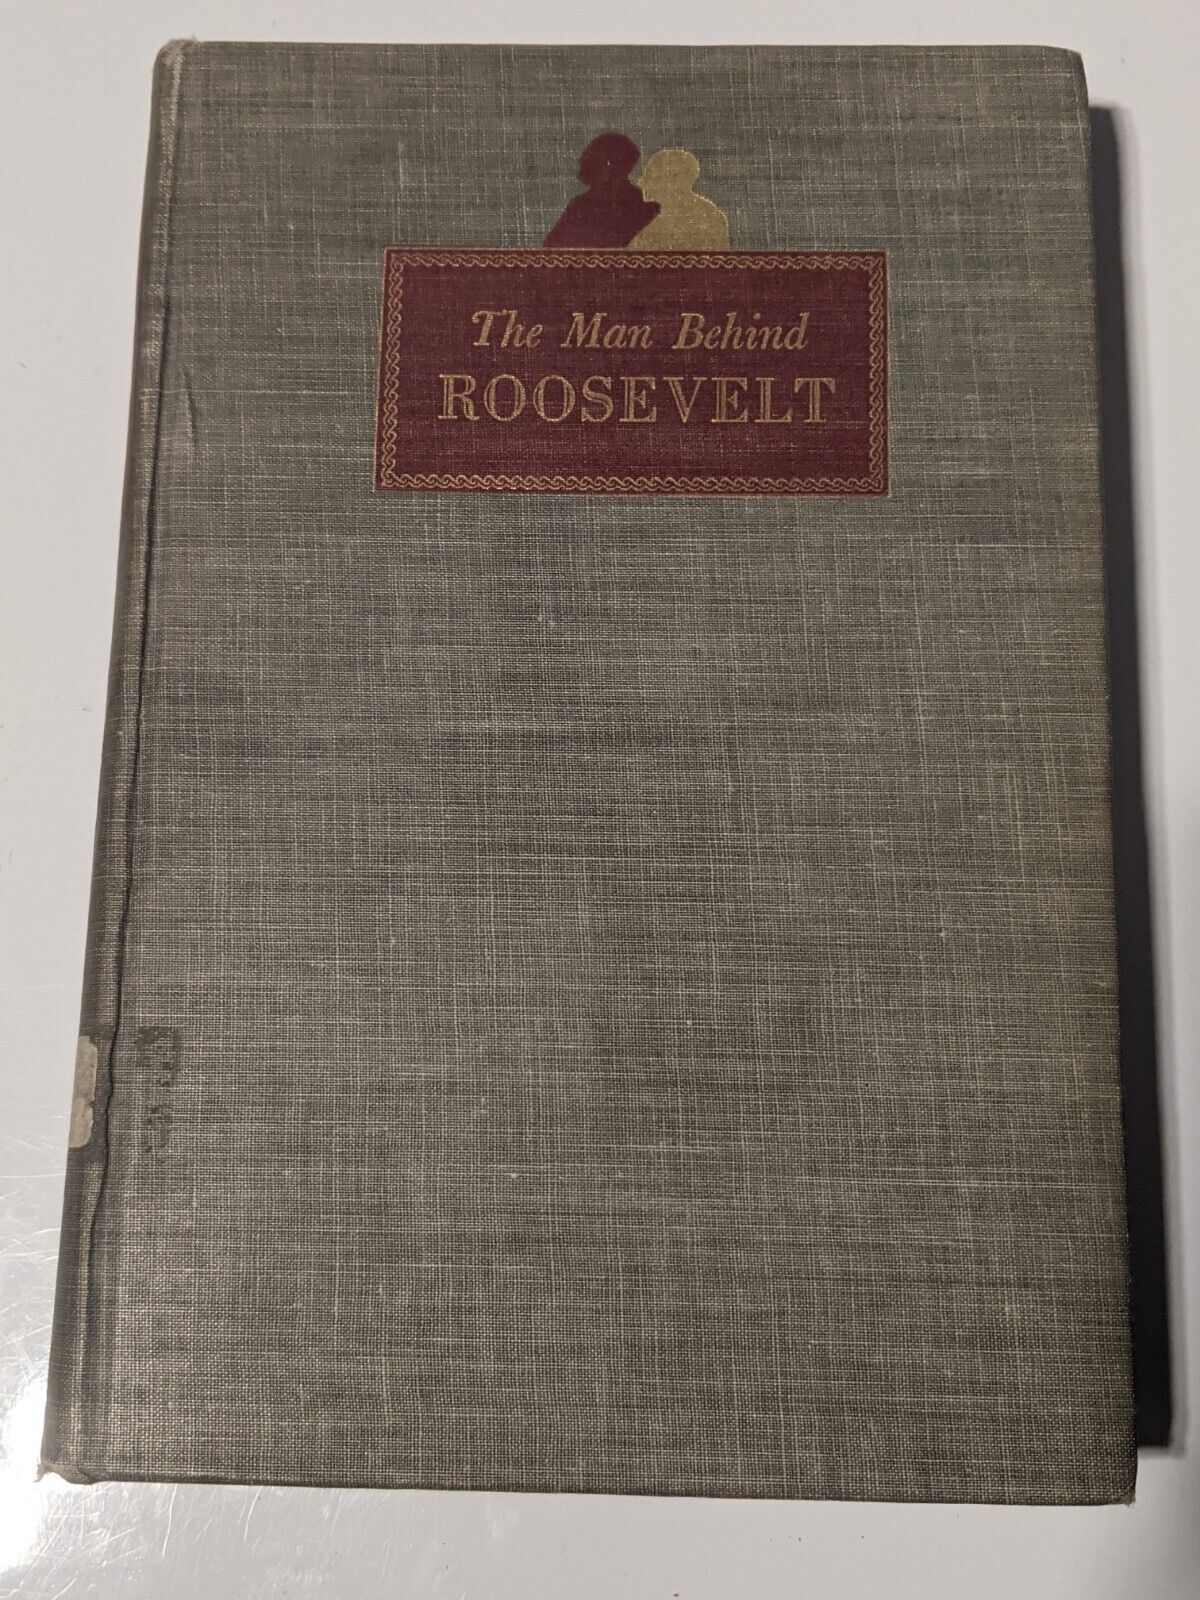 Vintage 1954 The Man Behind Roosevelt by Lela Stiles Hardcover